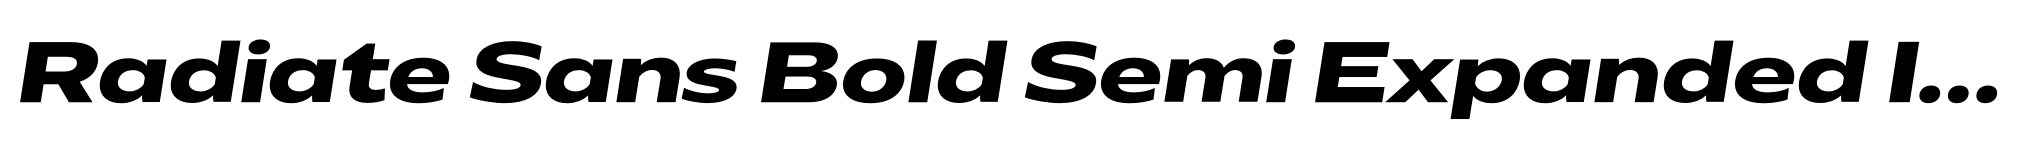 Radiate Sans Bold Semi Expanded Italic image